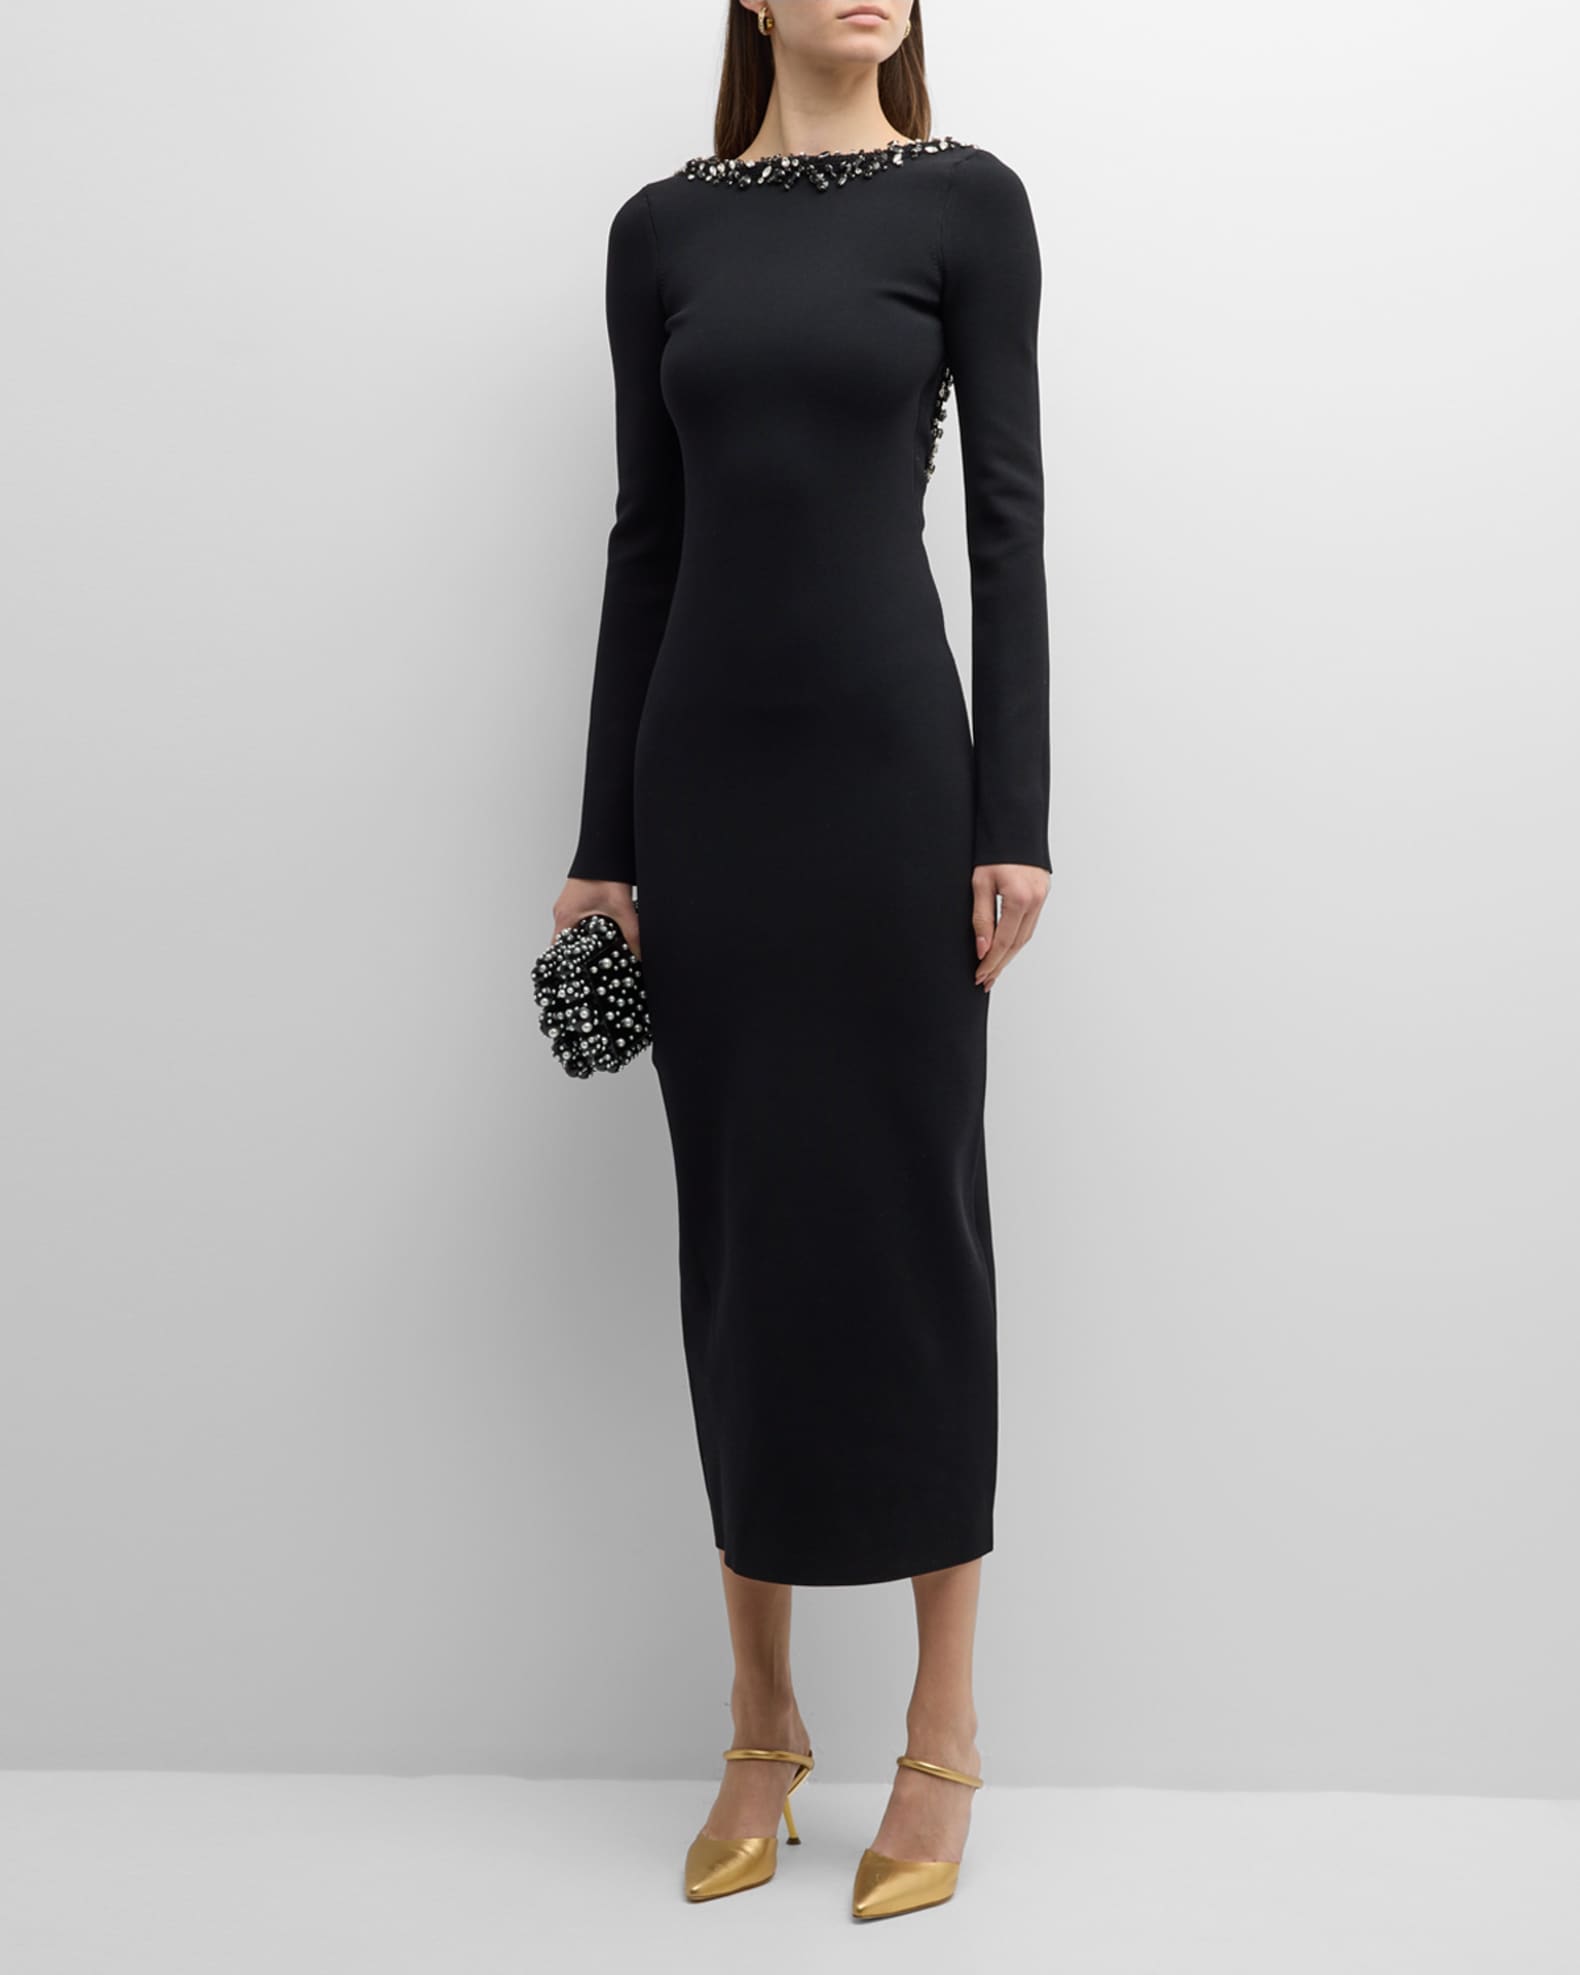 Elenora Black Sheer Embellished Bodycon Long-Sleeve Maxi Dress